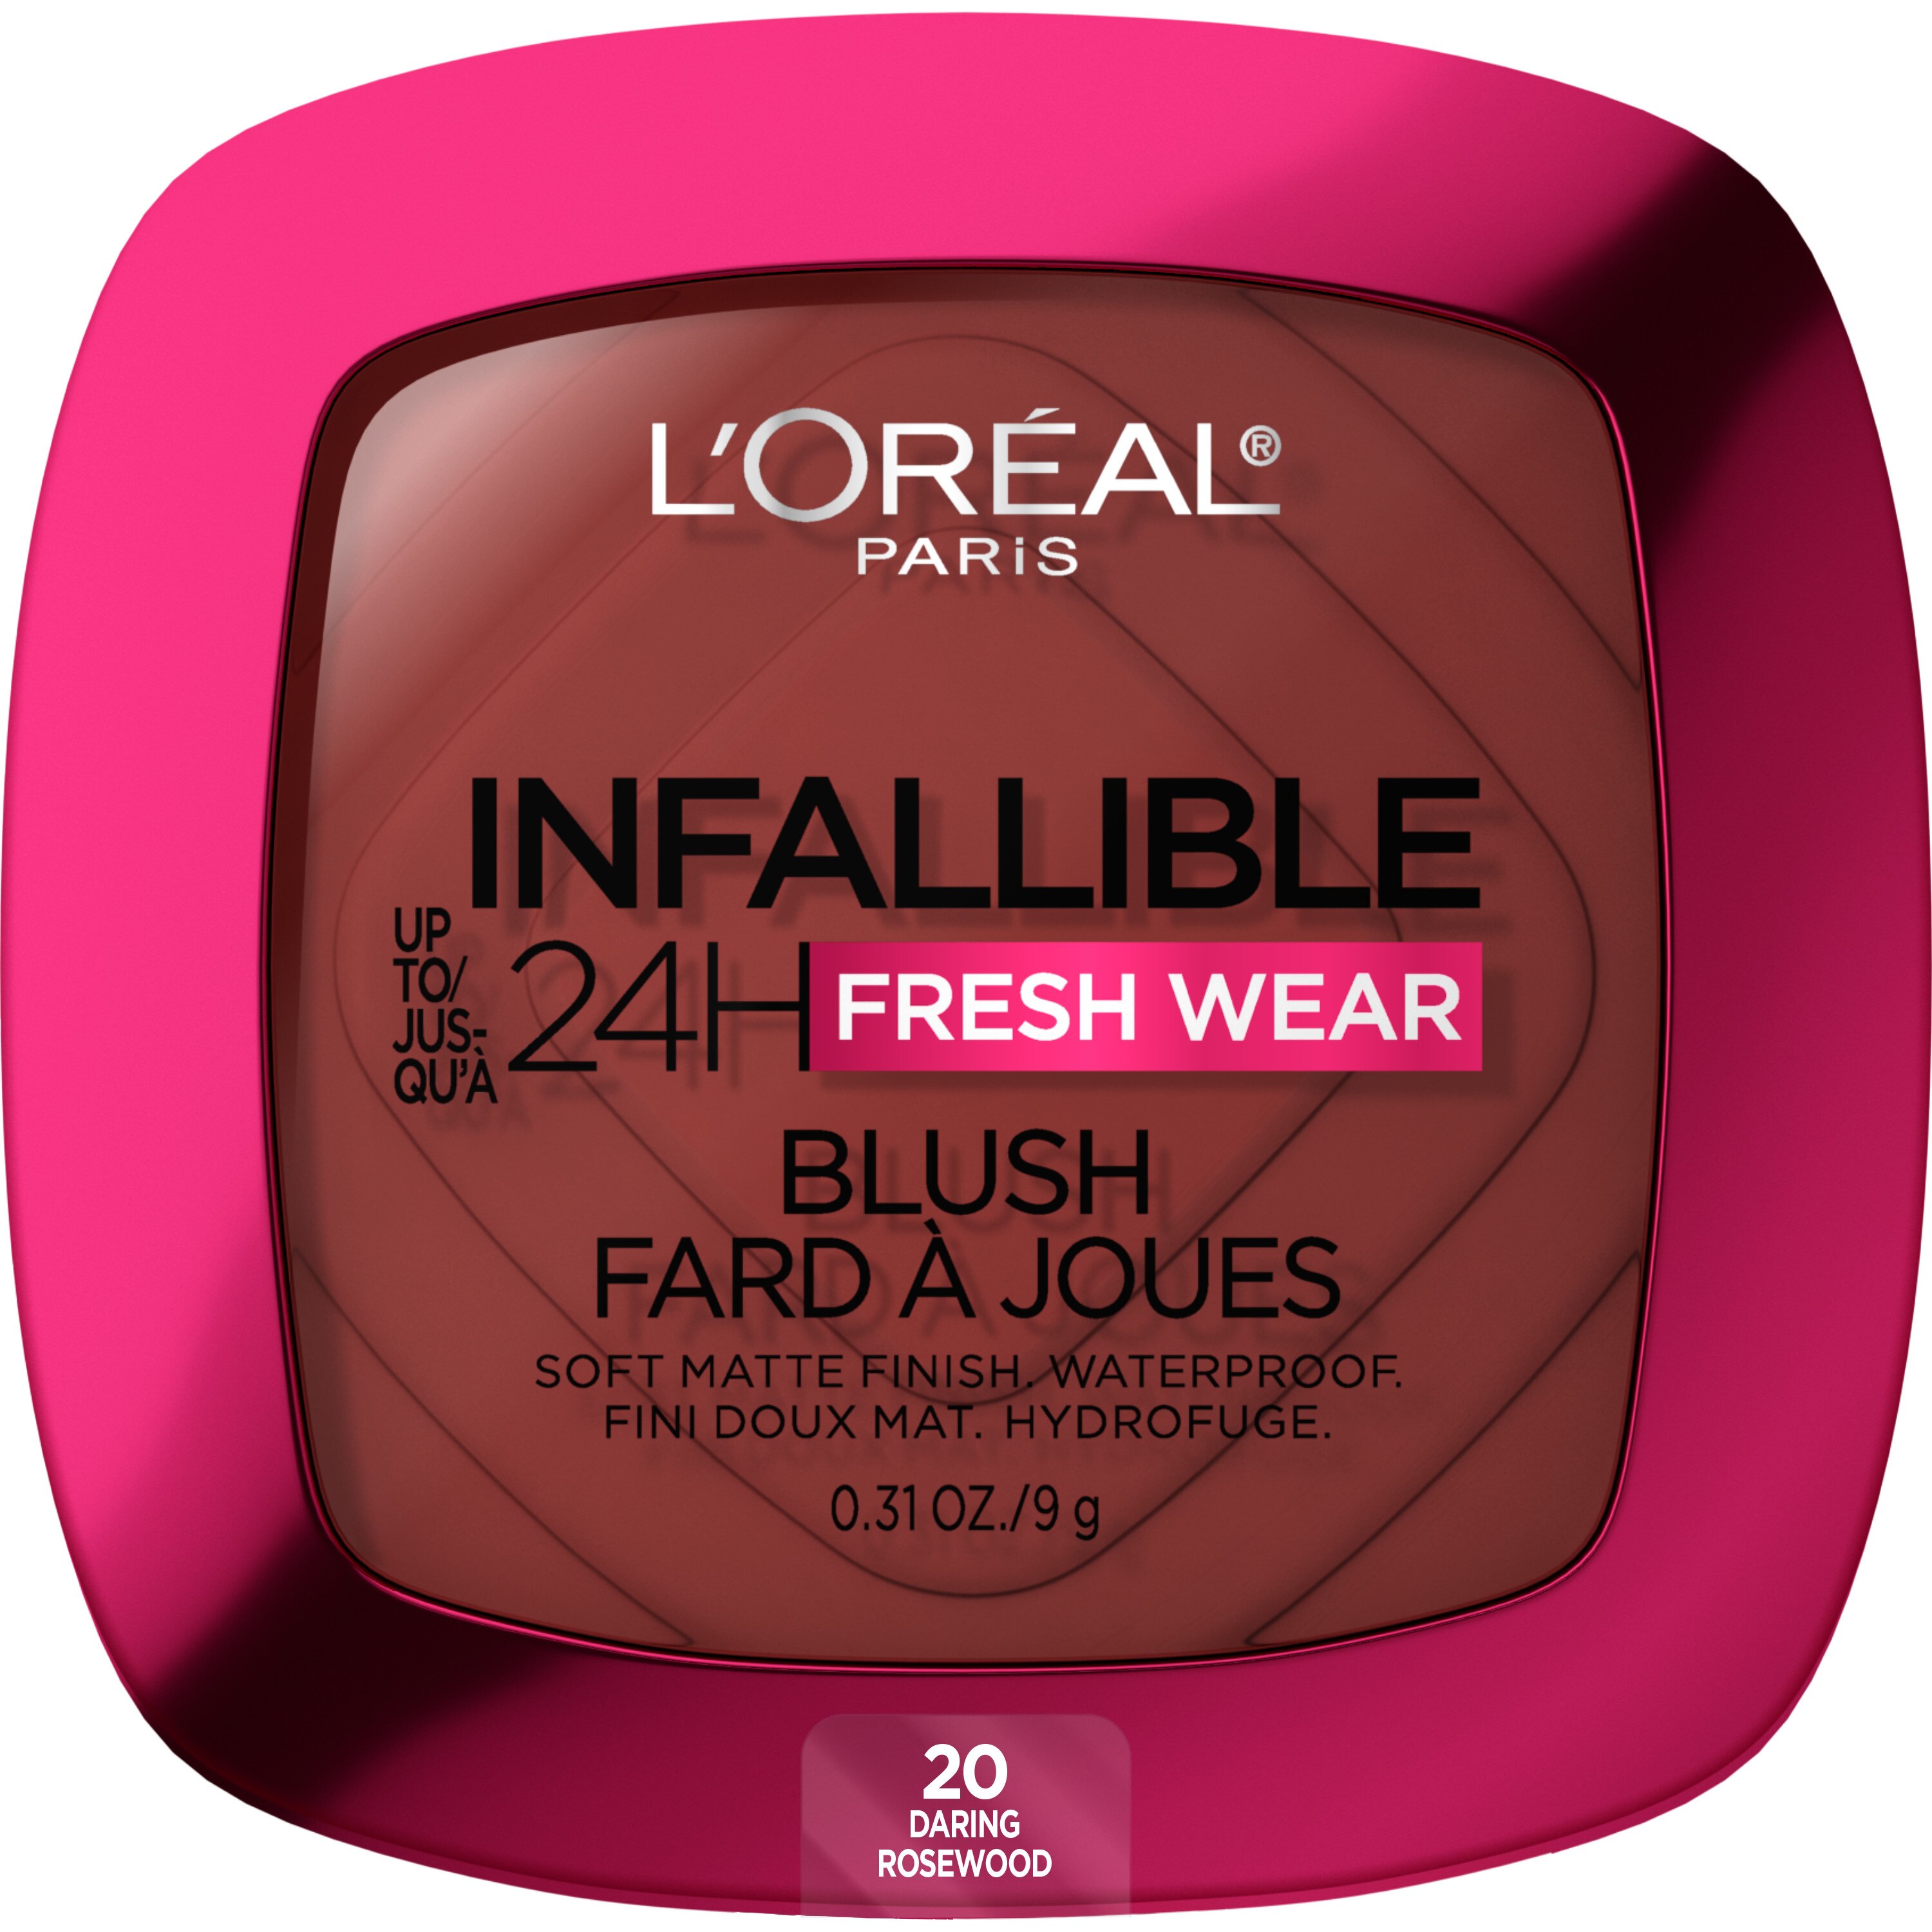 L'Oreal Paris Infallible Up to 24H Fresh Wear Soft Matte Blush